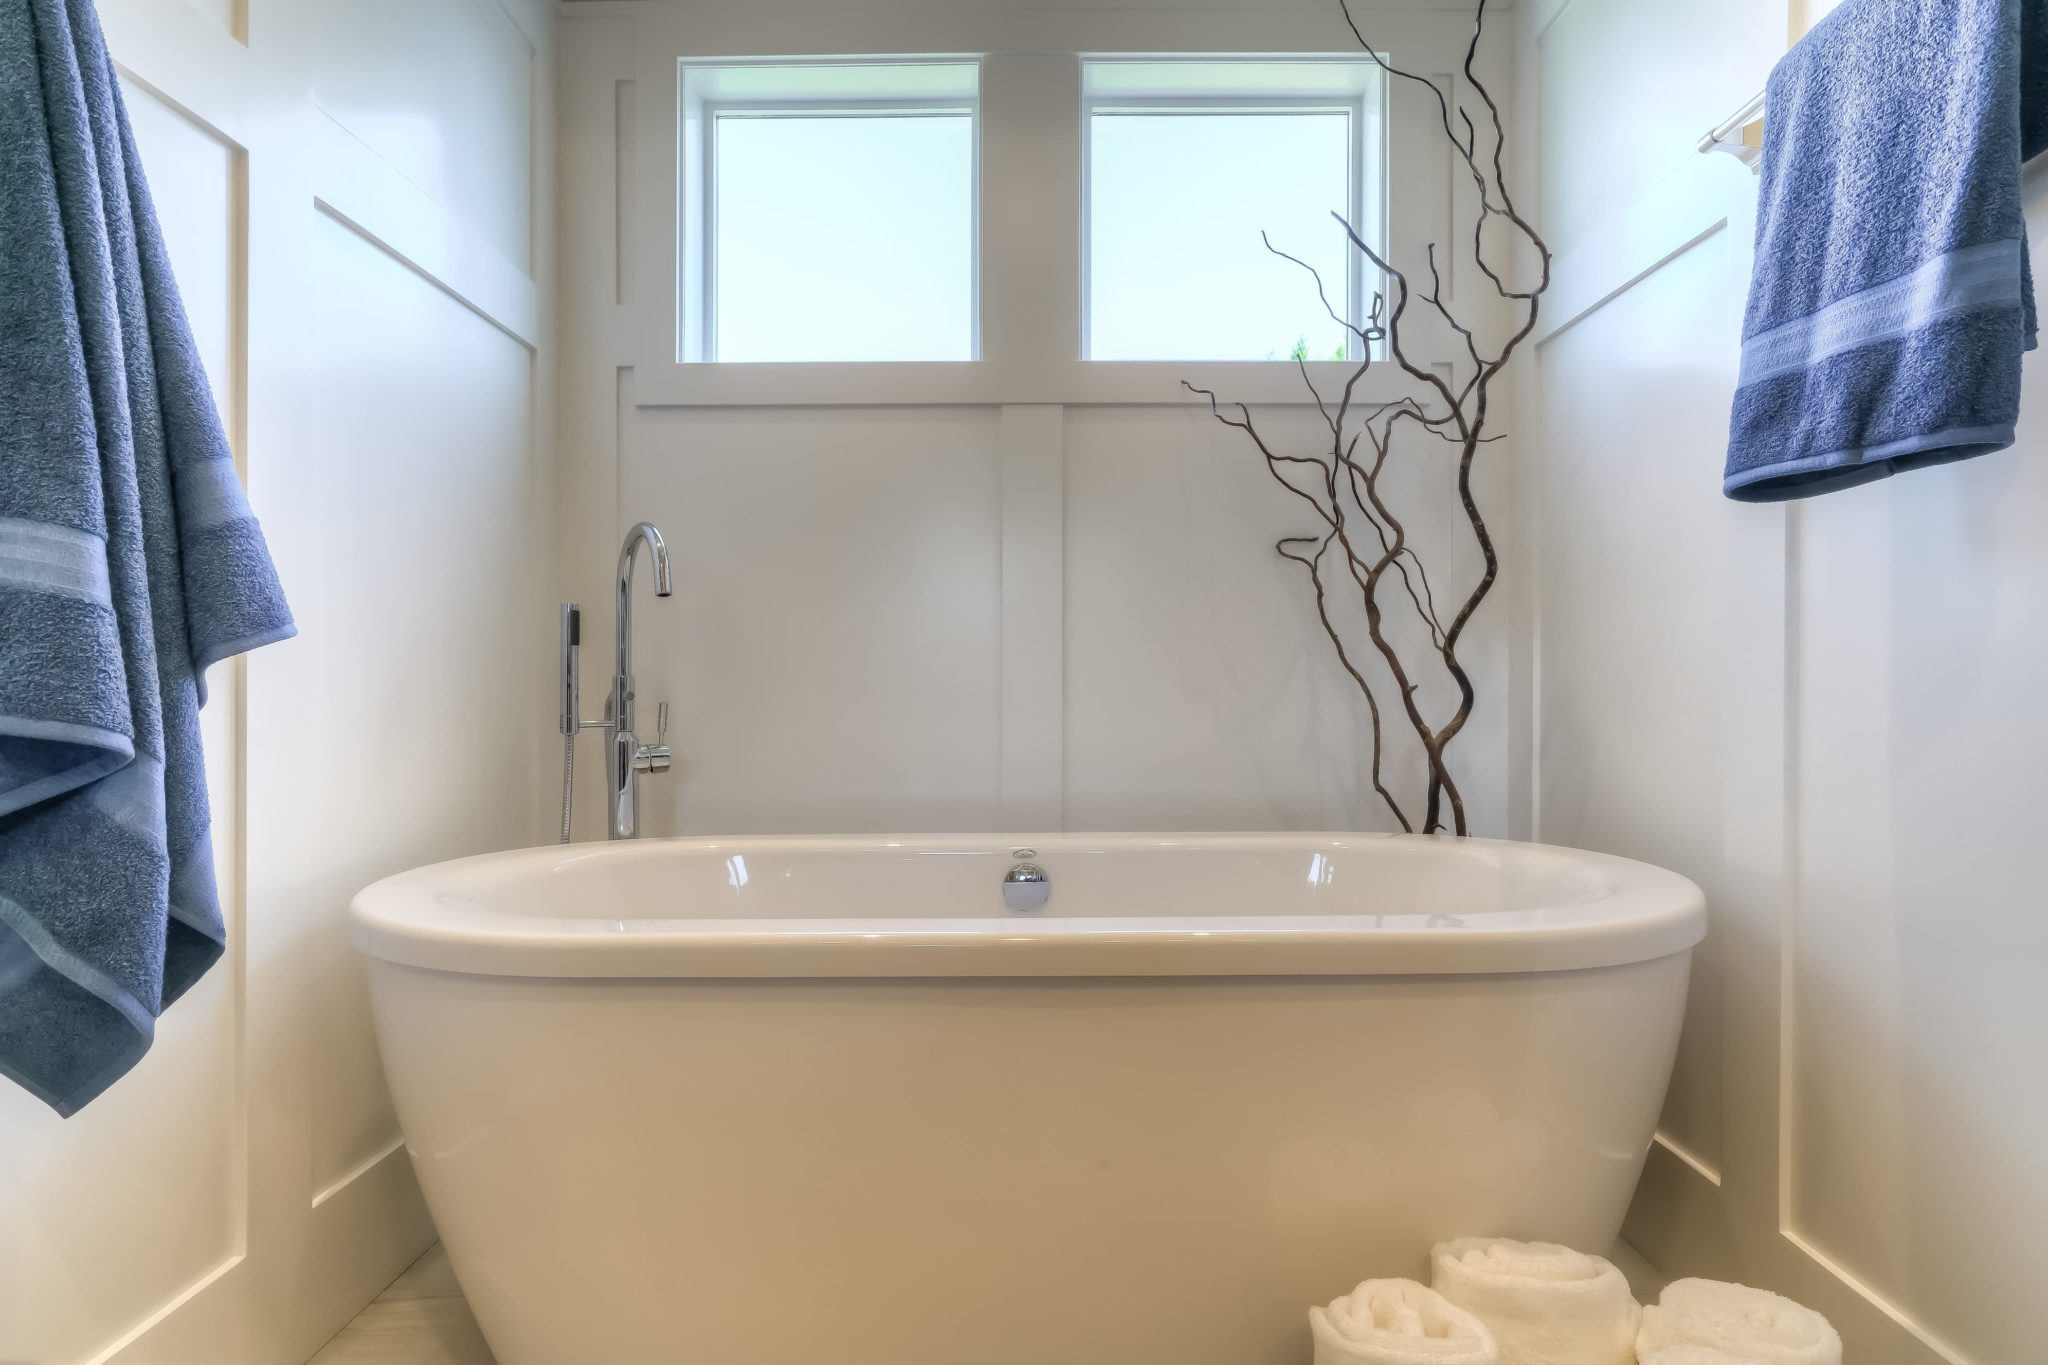 2017 Tour Homes bathroom area view tub